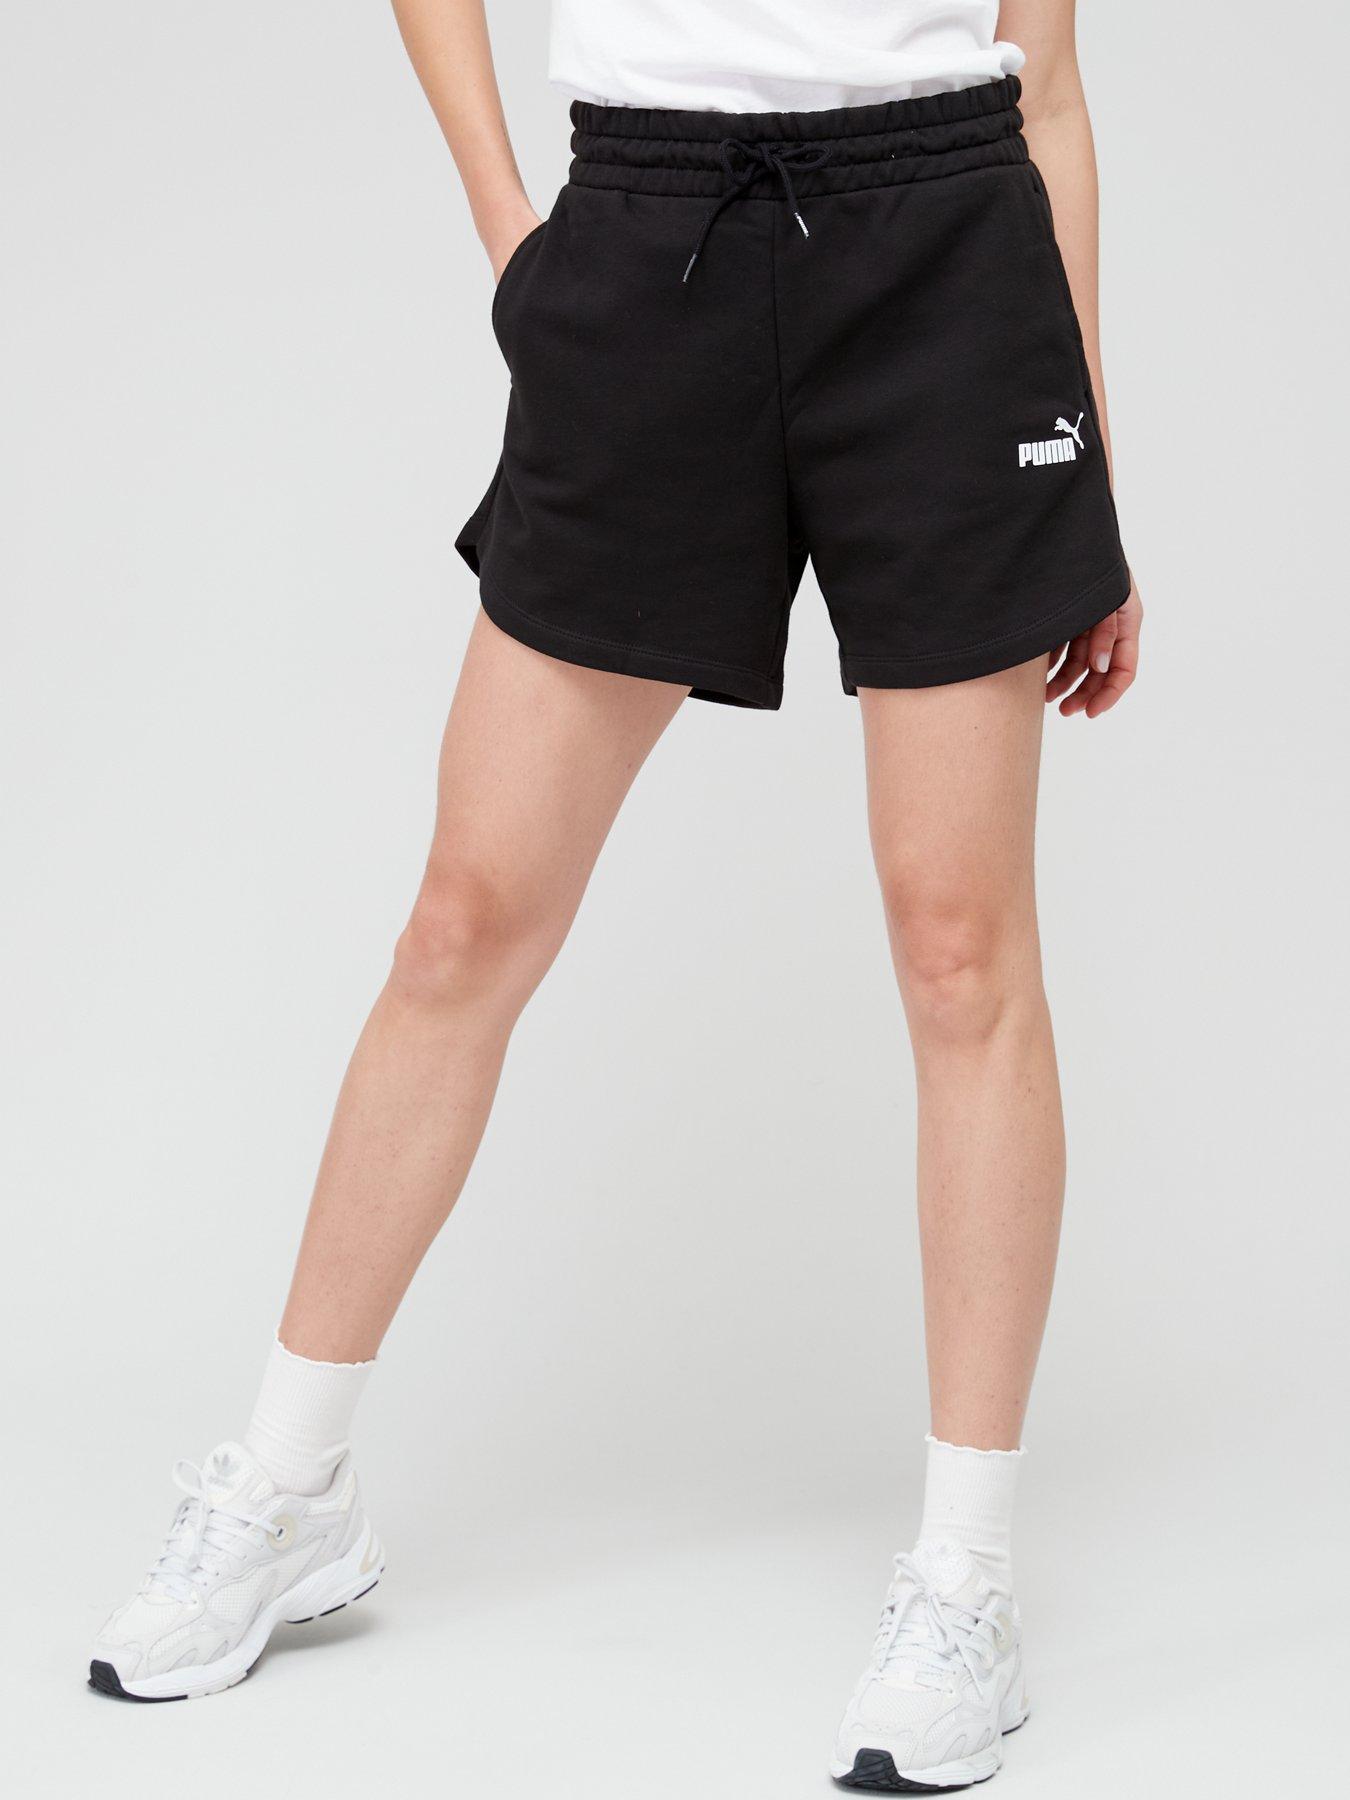 Buy Puma Vk Elevated Woven Mens Black Shorts online